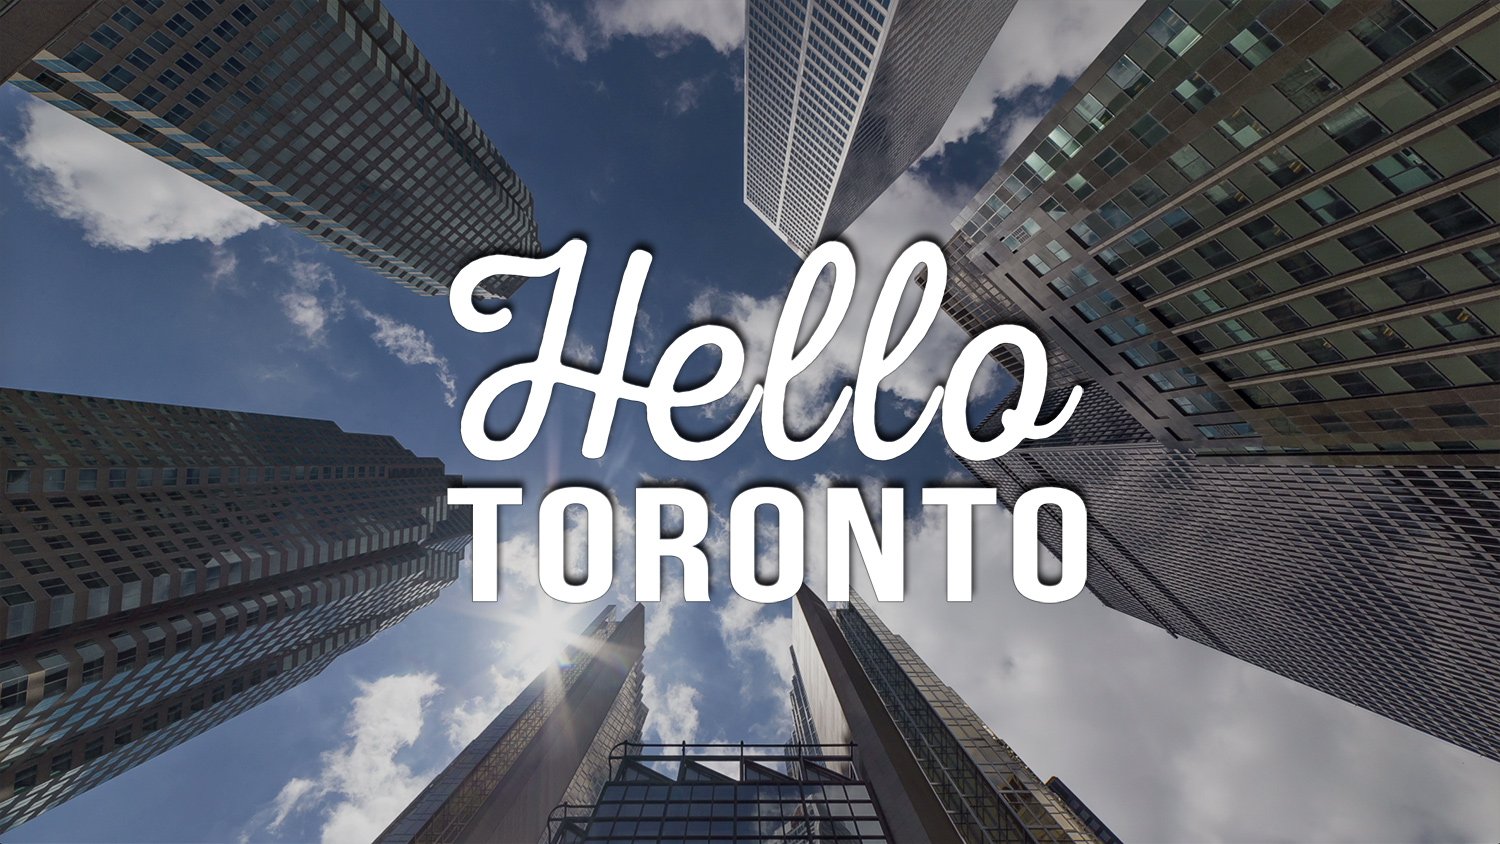 Hello Toronto's video thumbnail